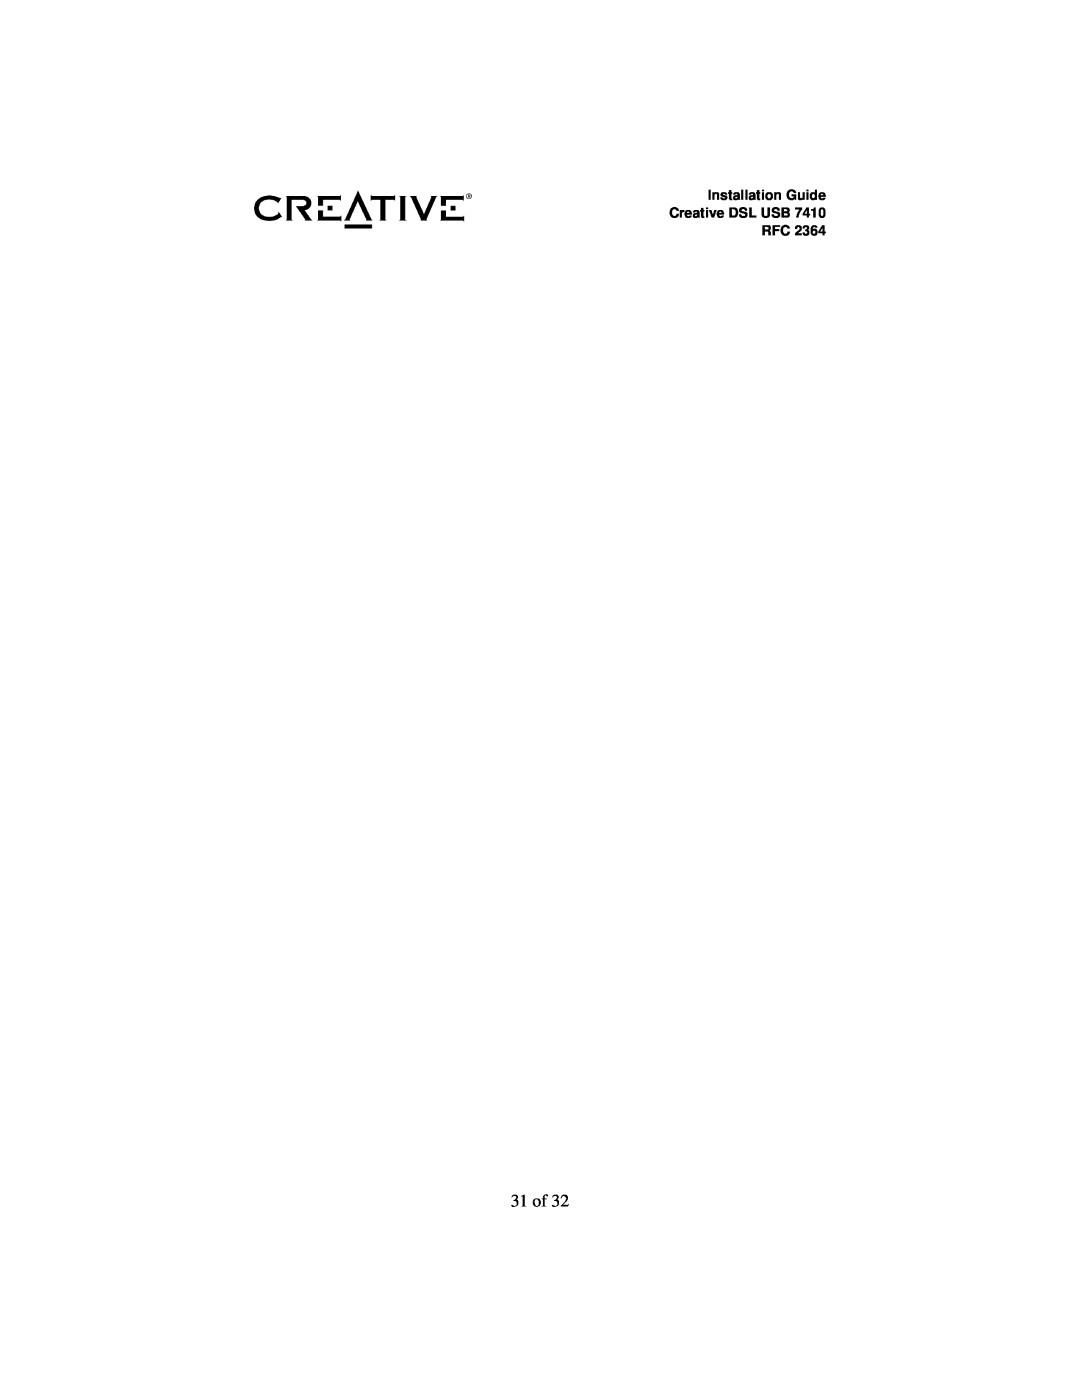 Creative RFC 2364 appendix 31 of, Installation Guide Creative DSL USB RFC 